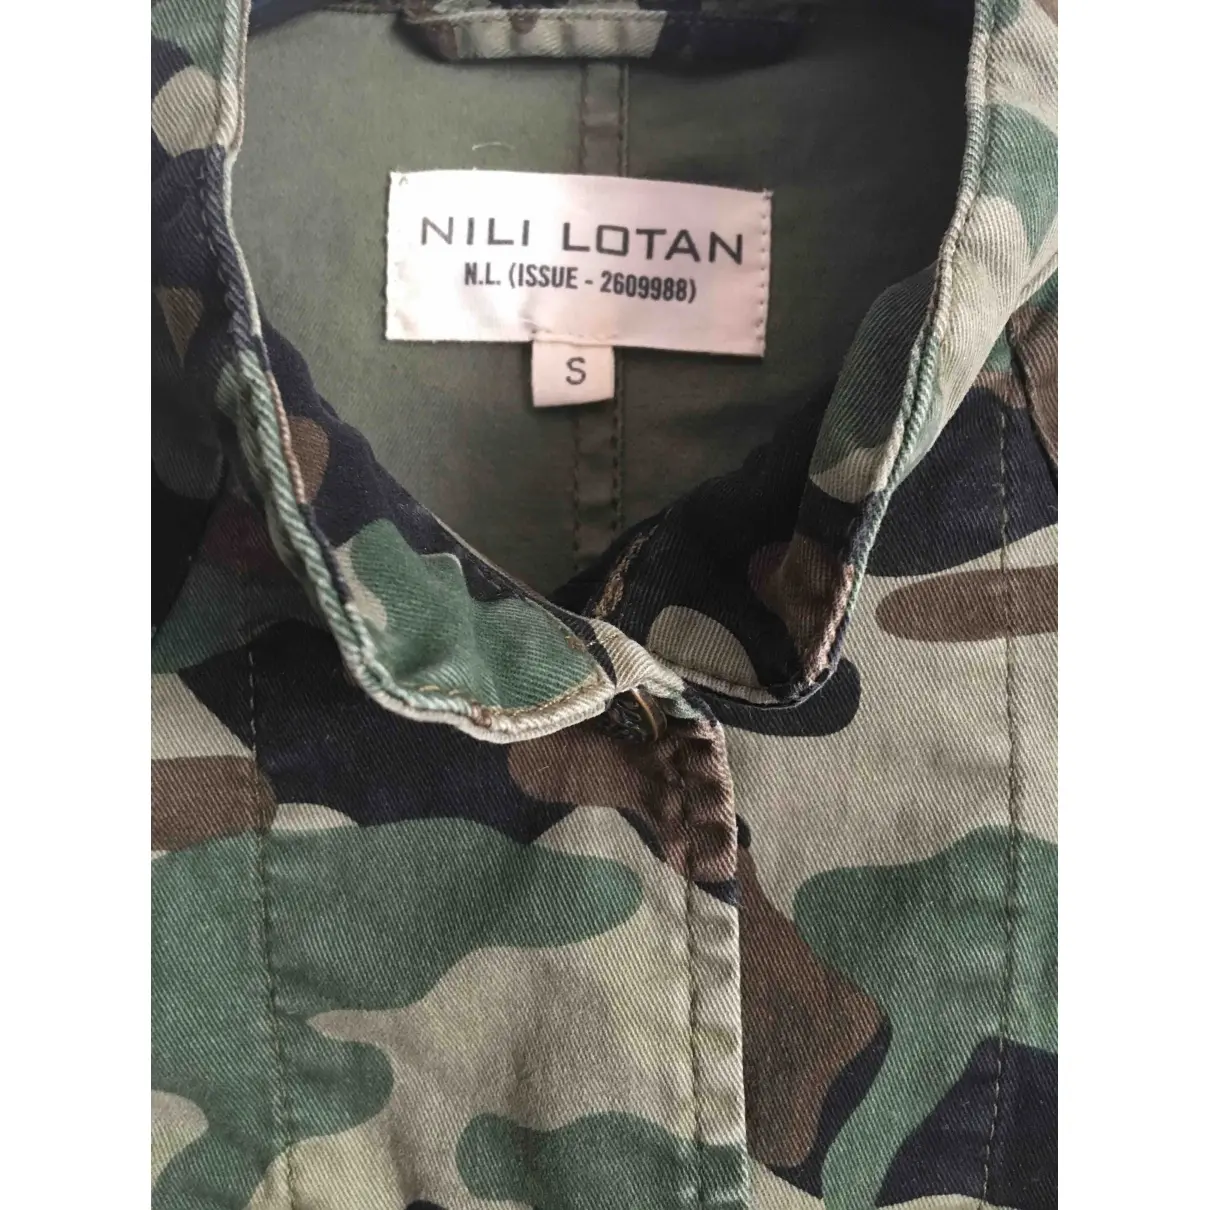 Buy Nili Lotan Jacket online